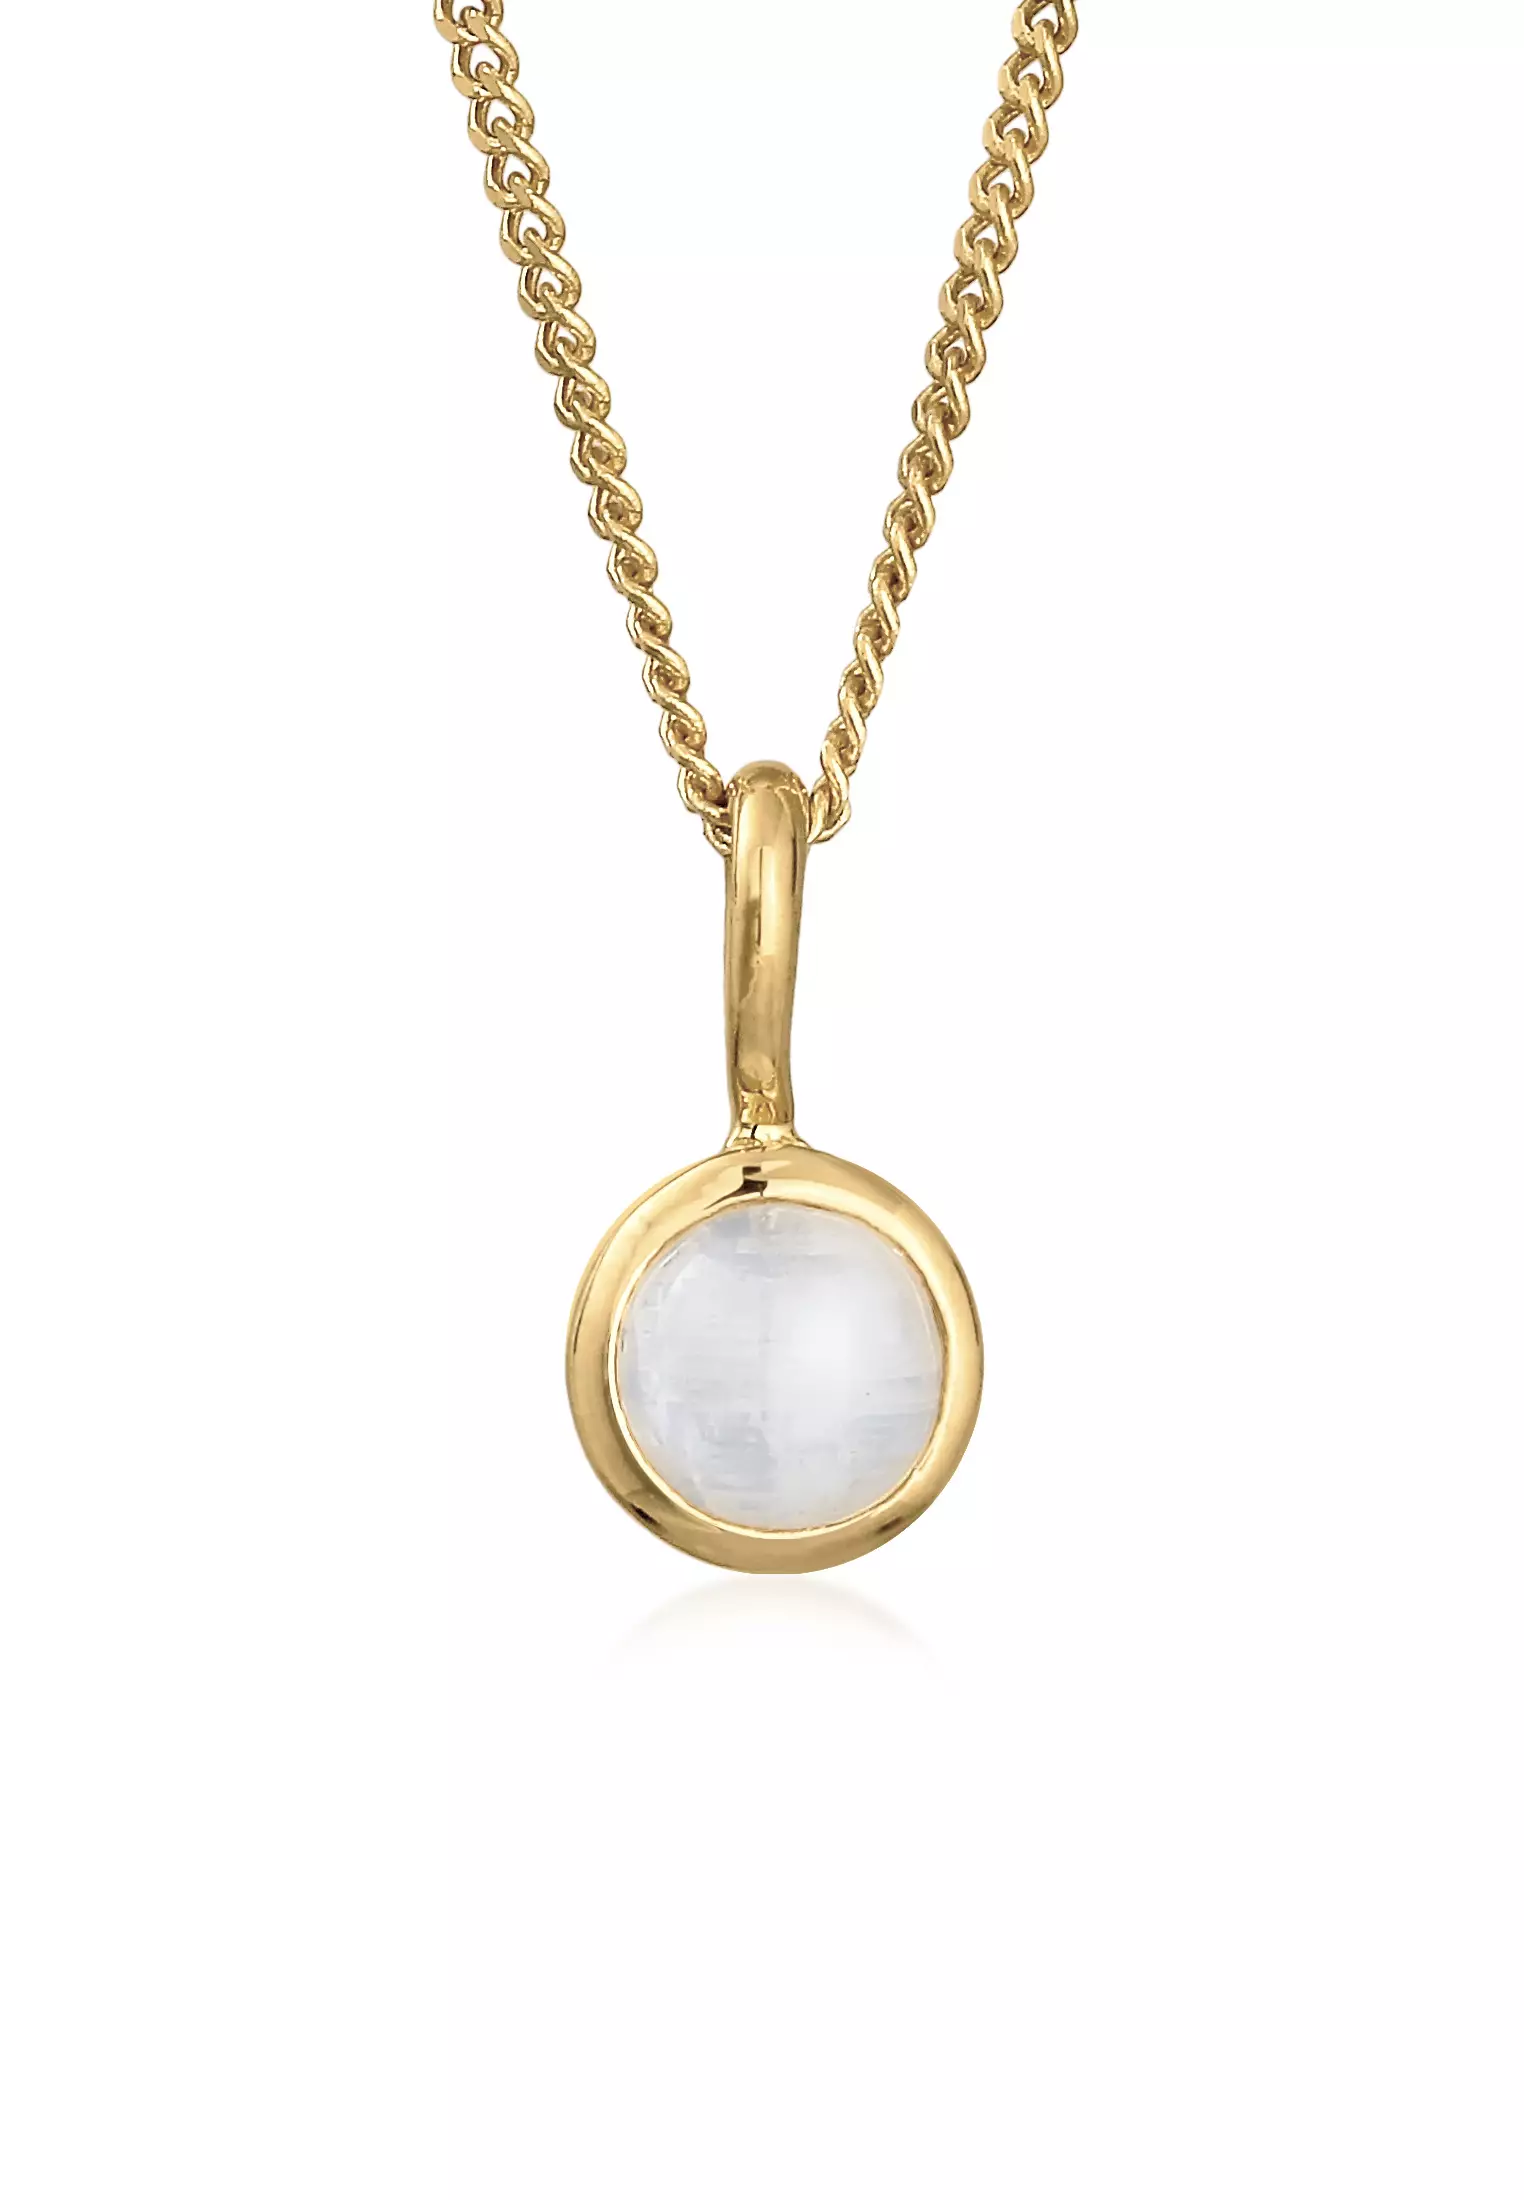 Buy Elli Jewelry Necklace Solitaire Classic Elegant Diamond 375